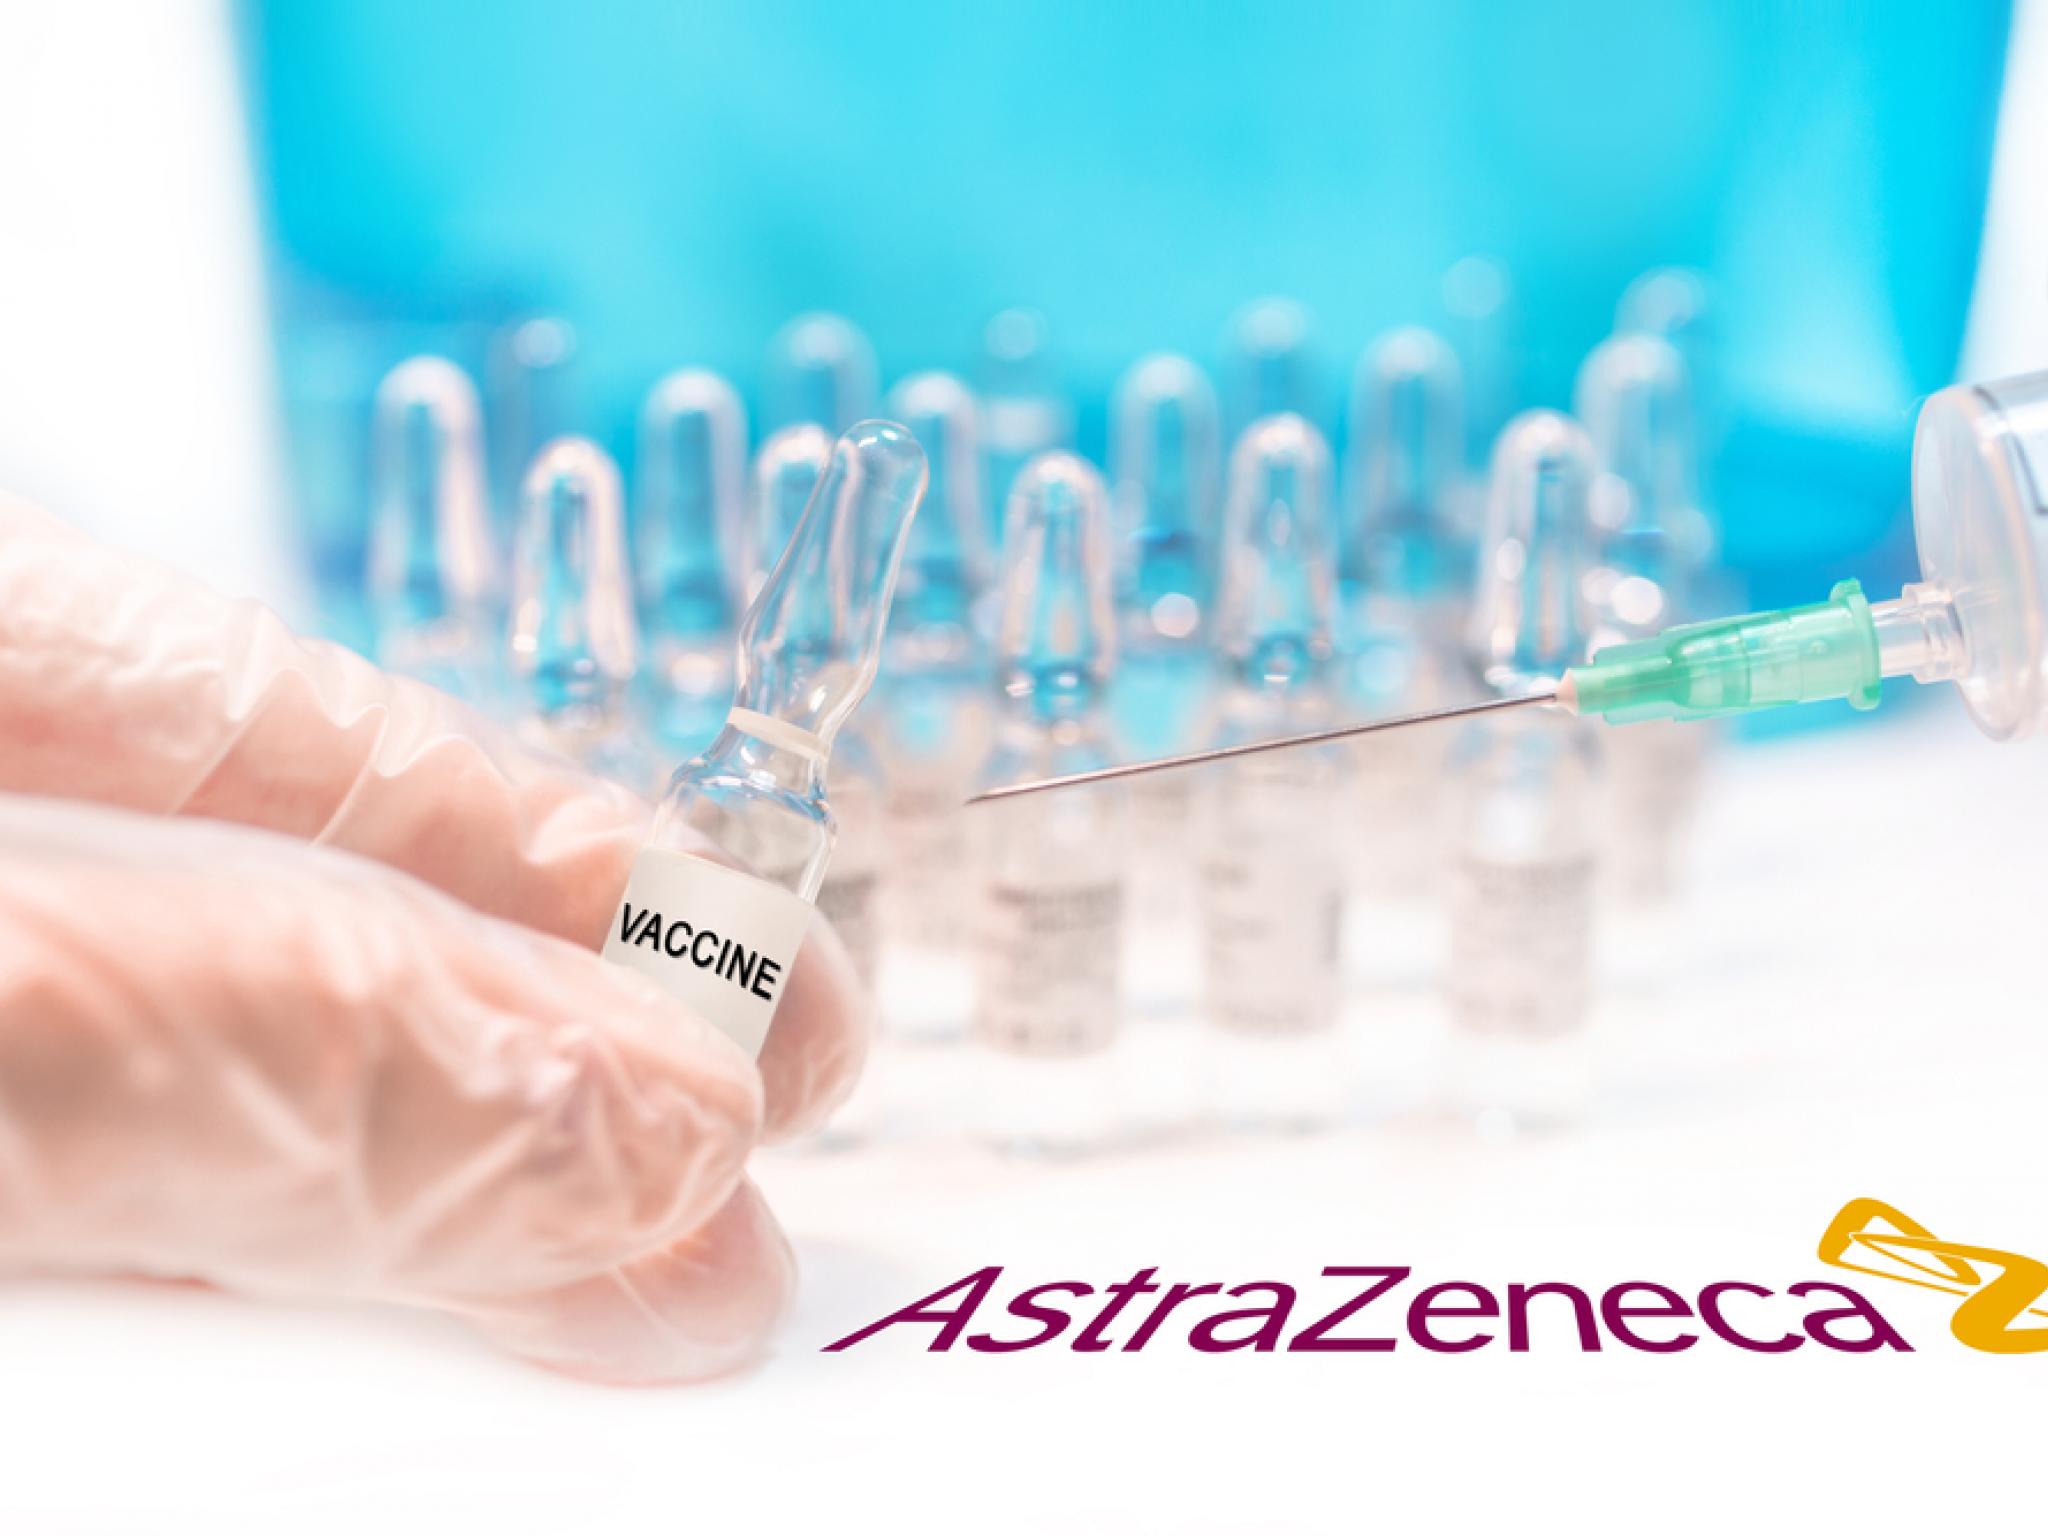  astrazeneca-pulls-plug-on-vaxzevria-covid-19-vaccine-amid-surplus-of-updated-vaccines 